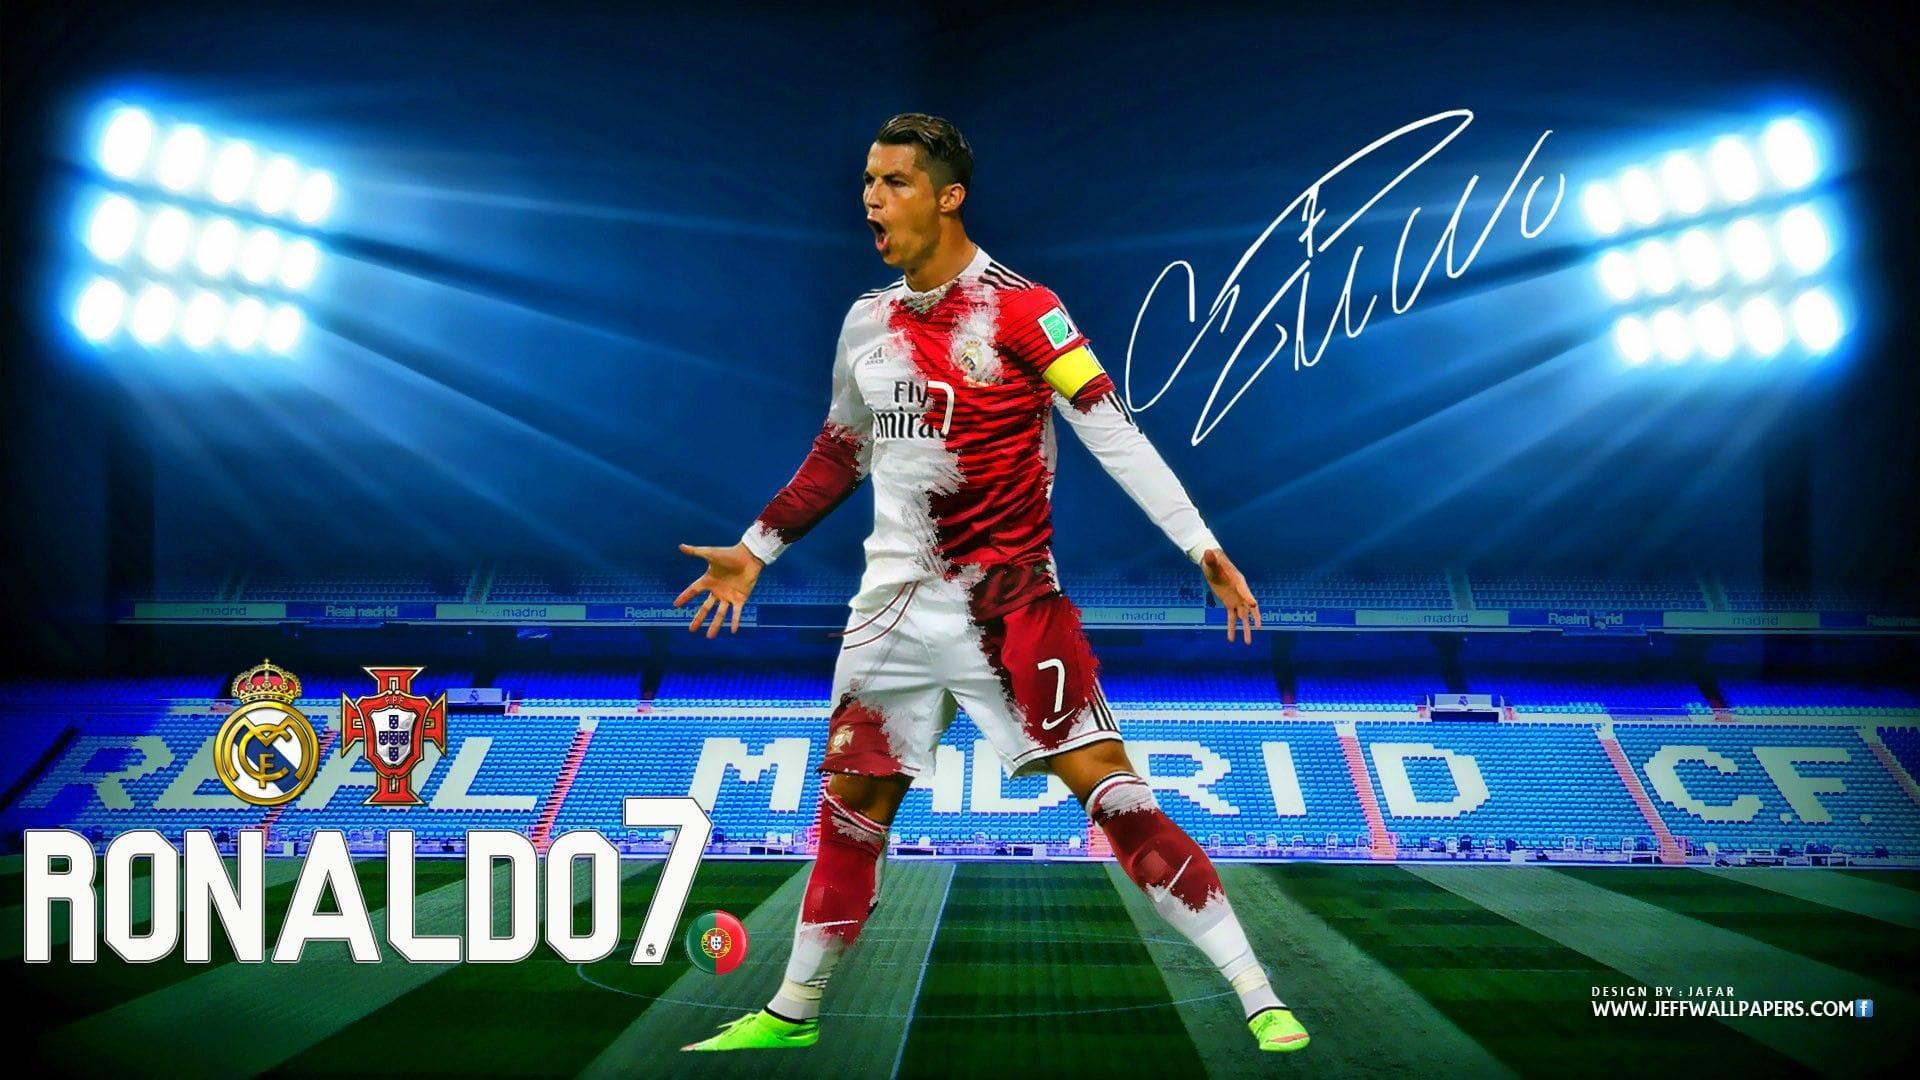 Beautiful image of Cristiano Ronaldo 2017 as computer wallpaper